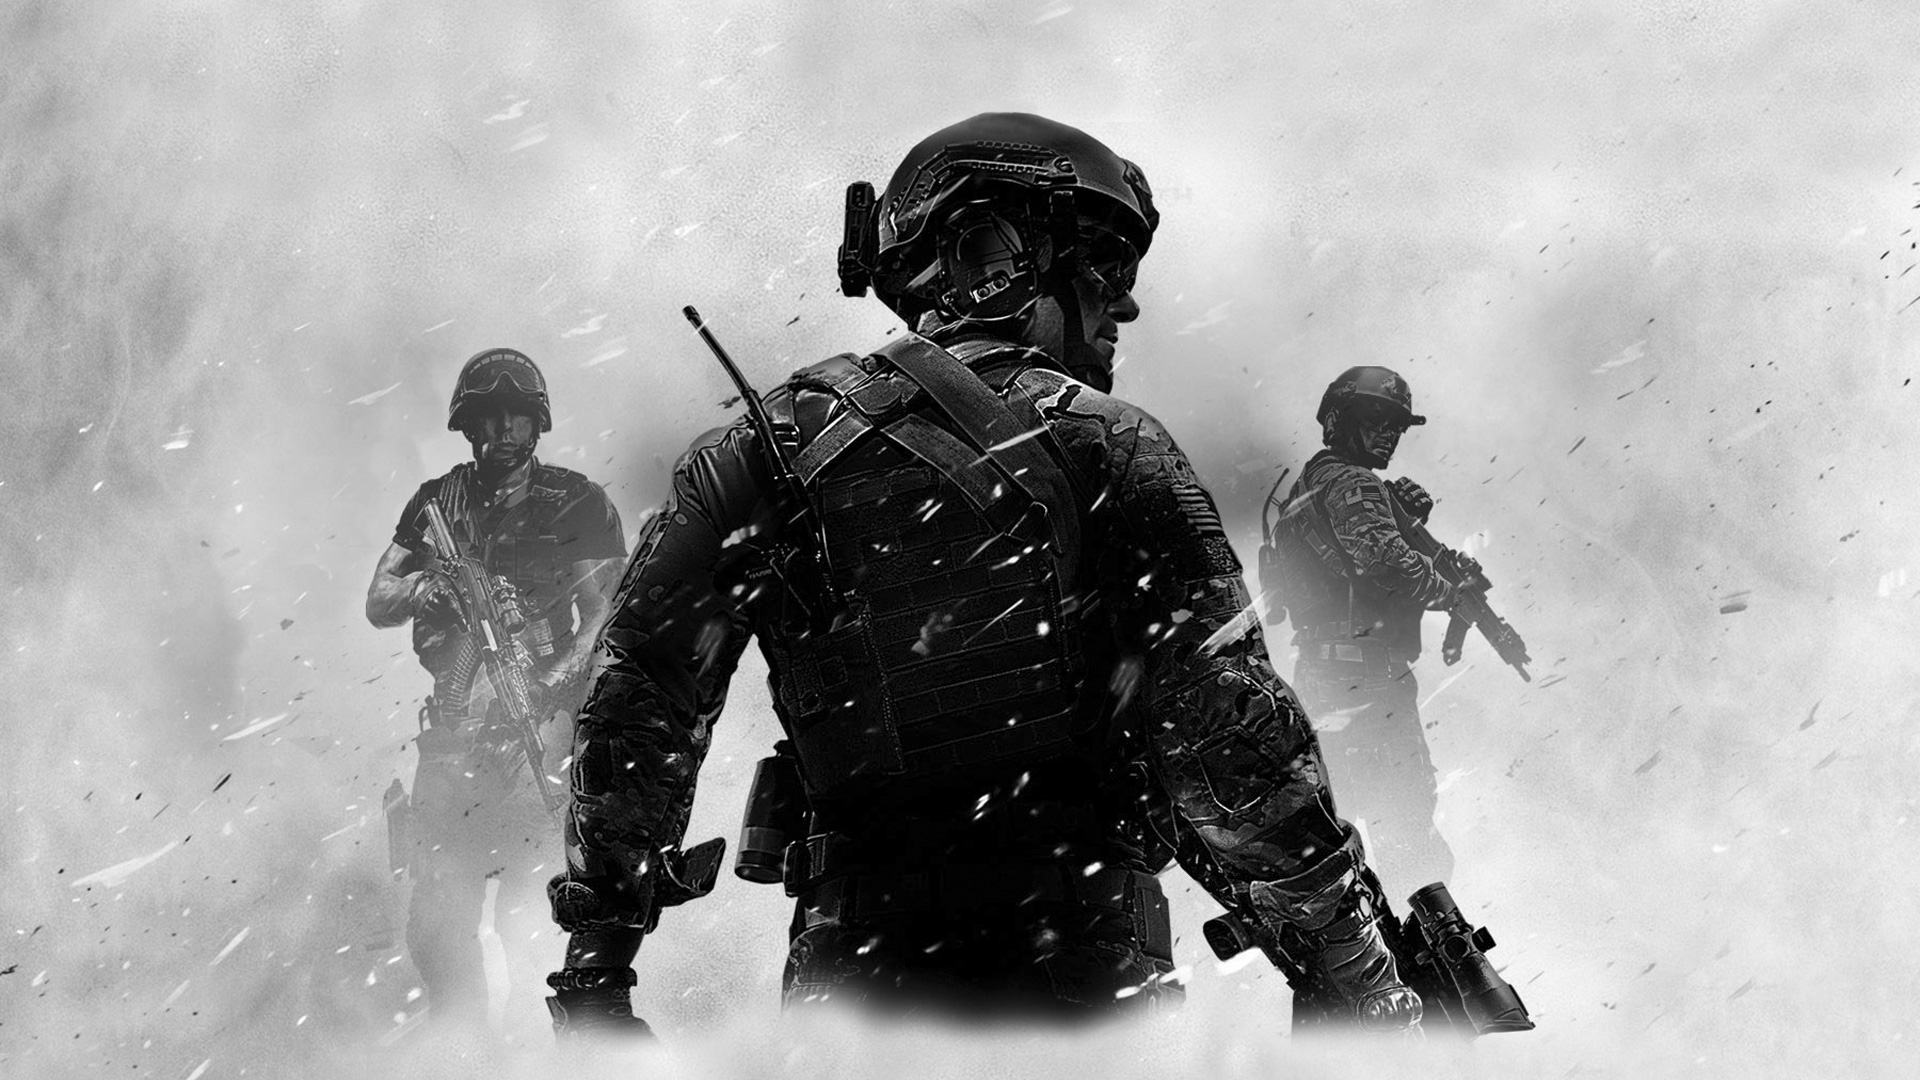 Wallpaper 4 Wallpaper from Call of Duty Modern Warfare 3